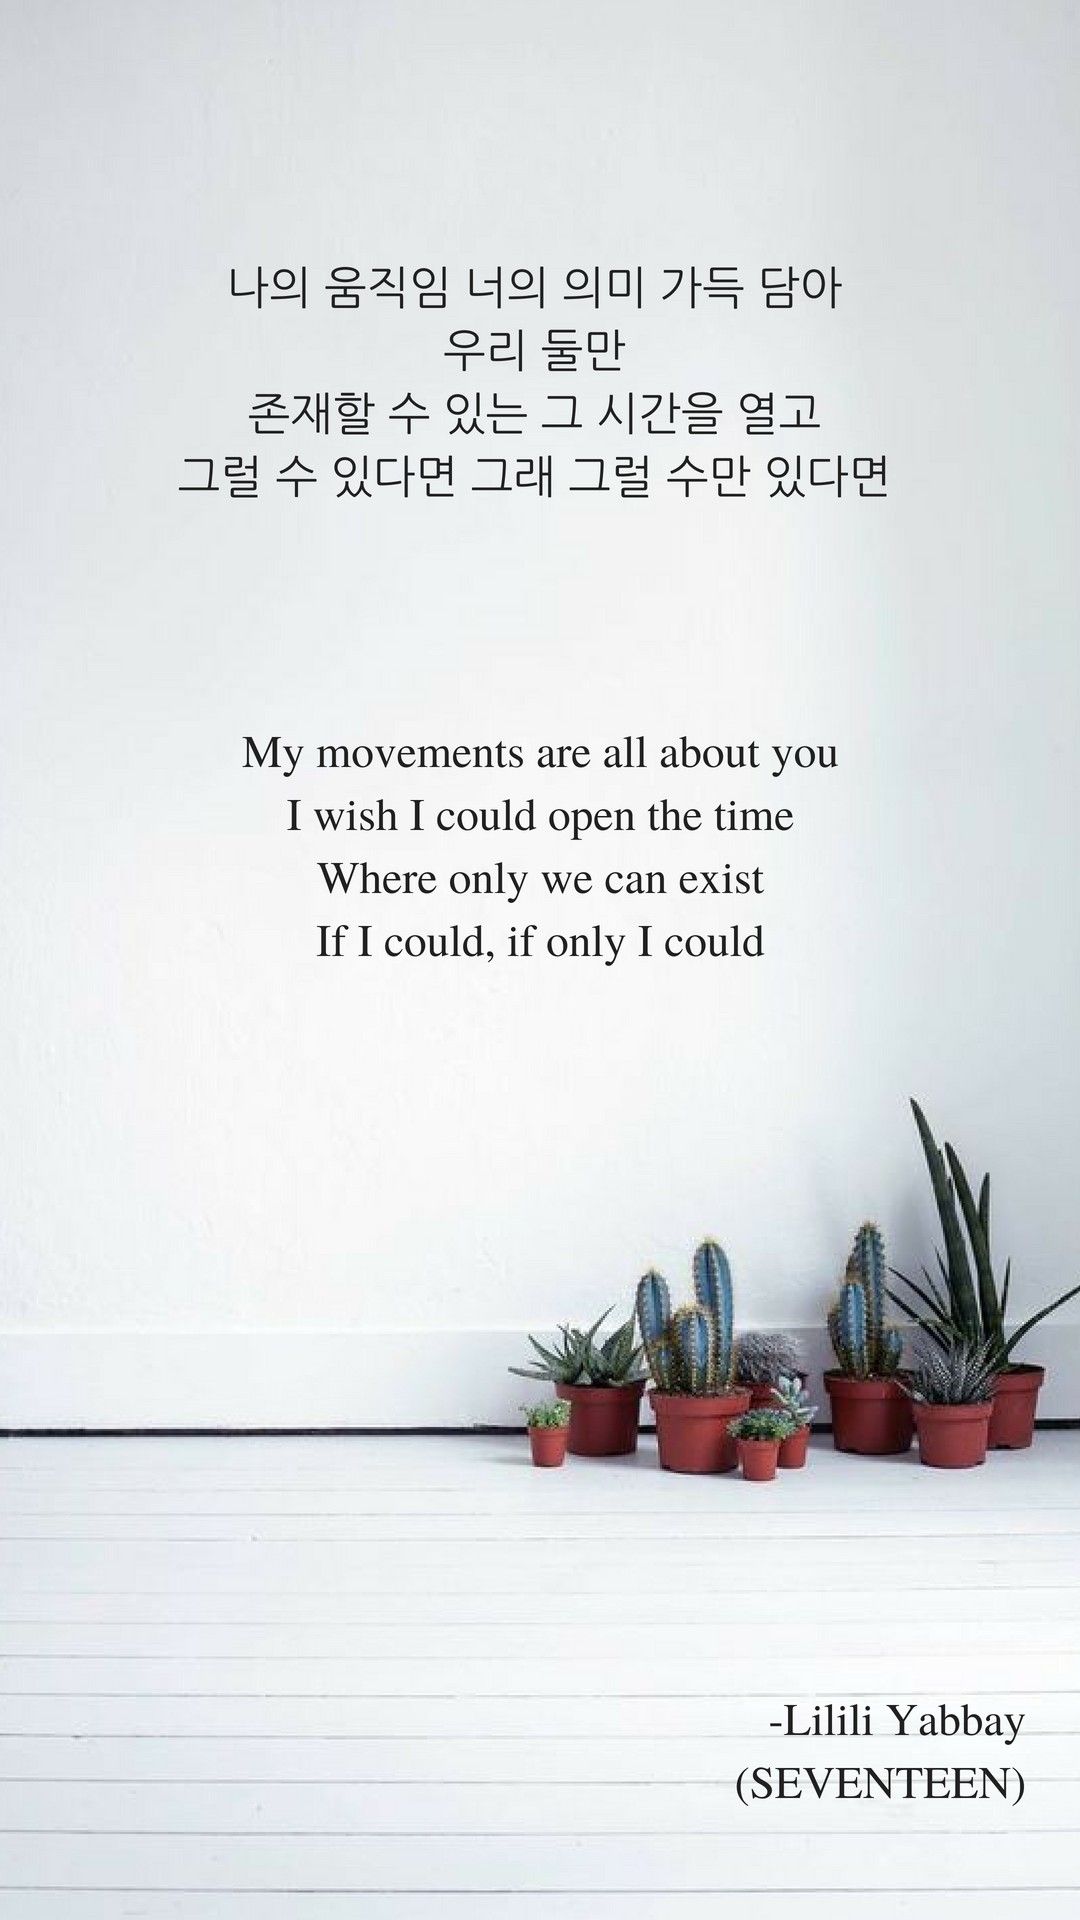 Lilili Yabbay by Seventeen Performance Unit. Lyrics wallpaper. Seventeen lyrics, Song lyrics wallpaper, Pop lyrics